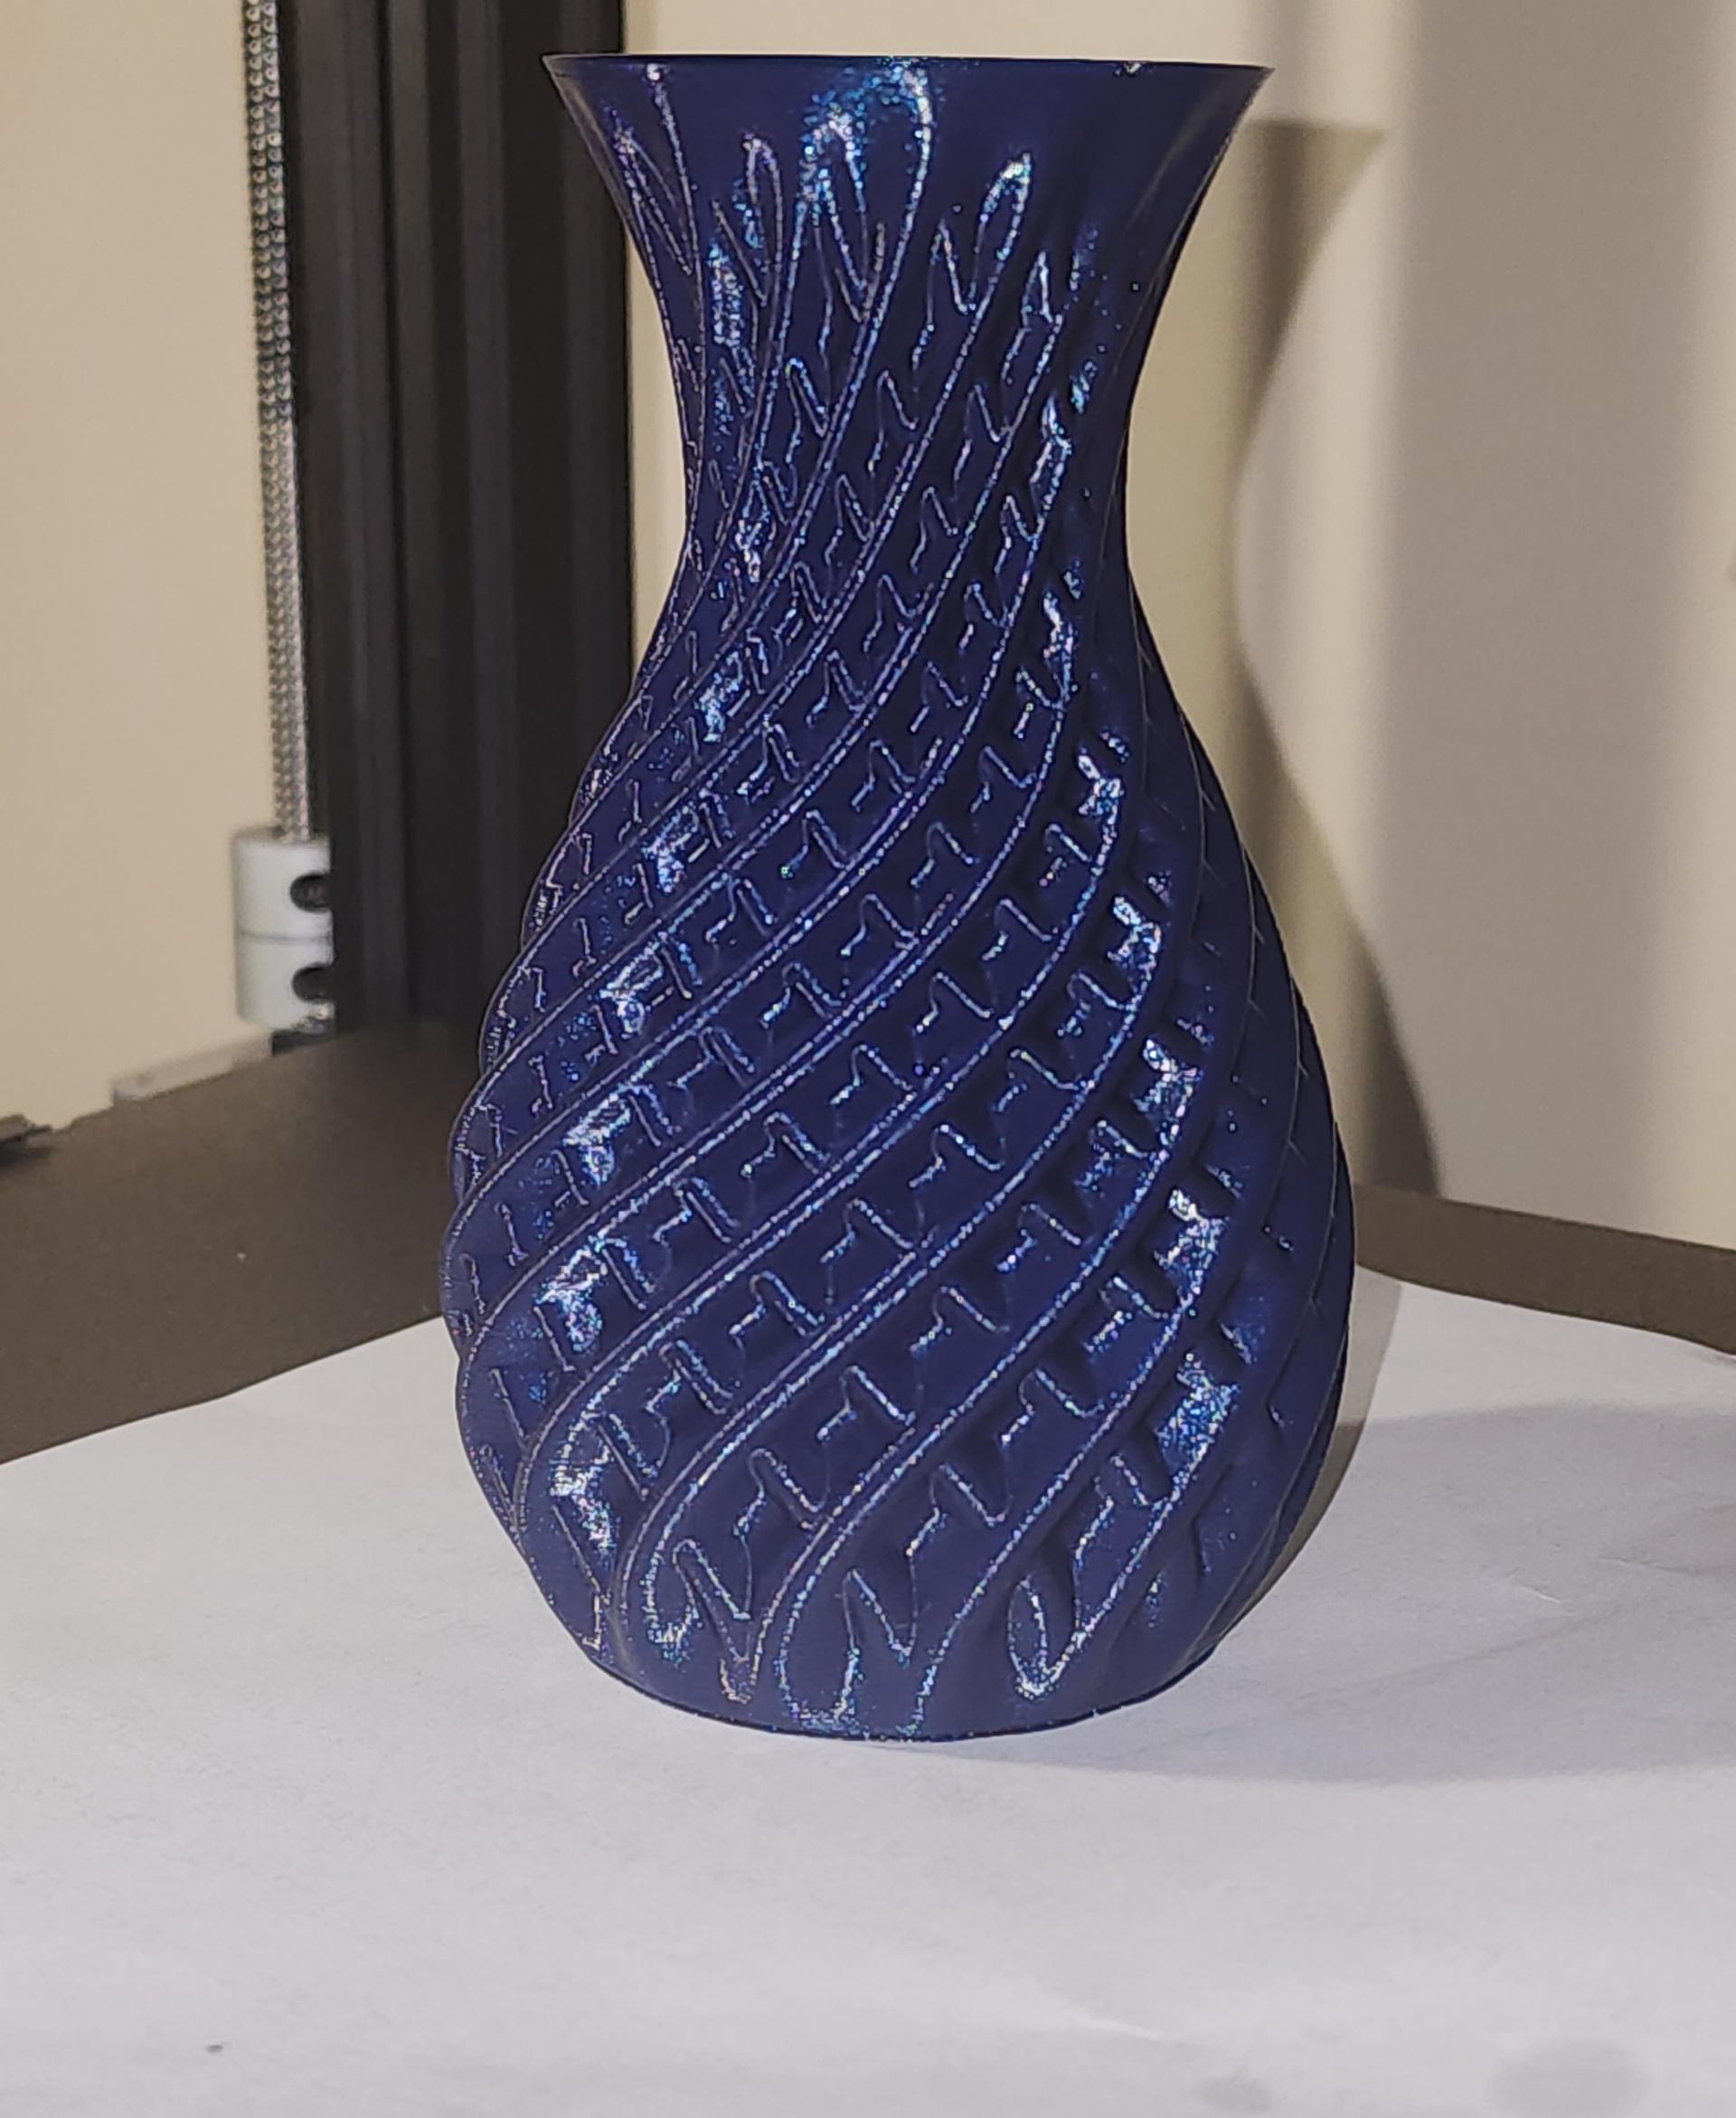 Double Twist Vase (Vase No. 5) 3d model